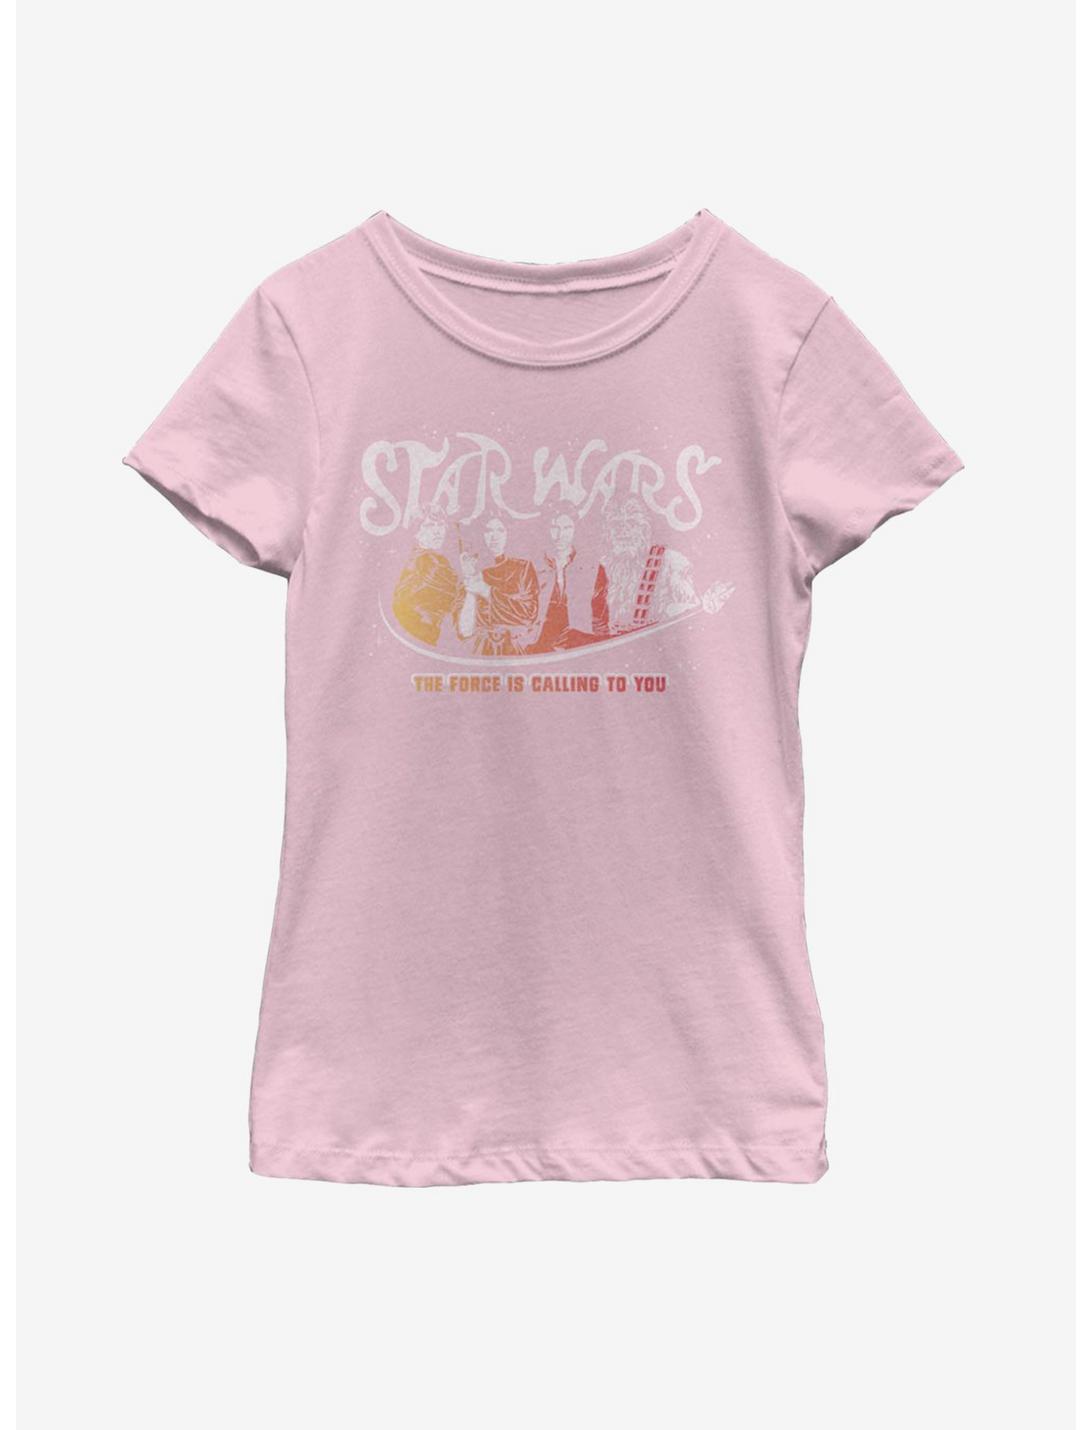 Star Wars Vintage Script Star Wars Youth Girls T-Shirt, PINK, hi-res